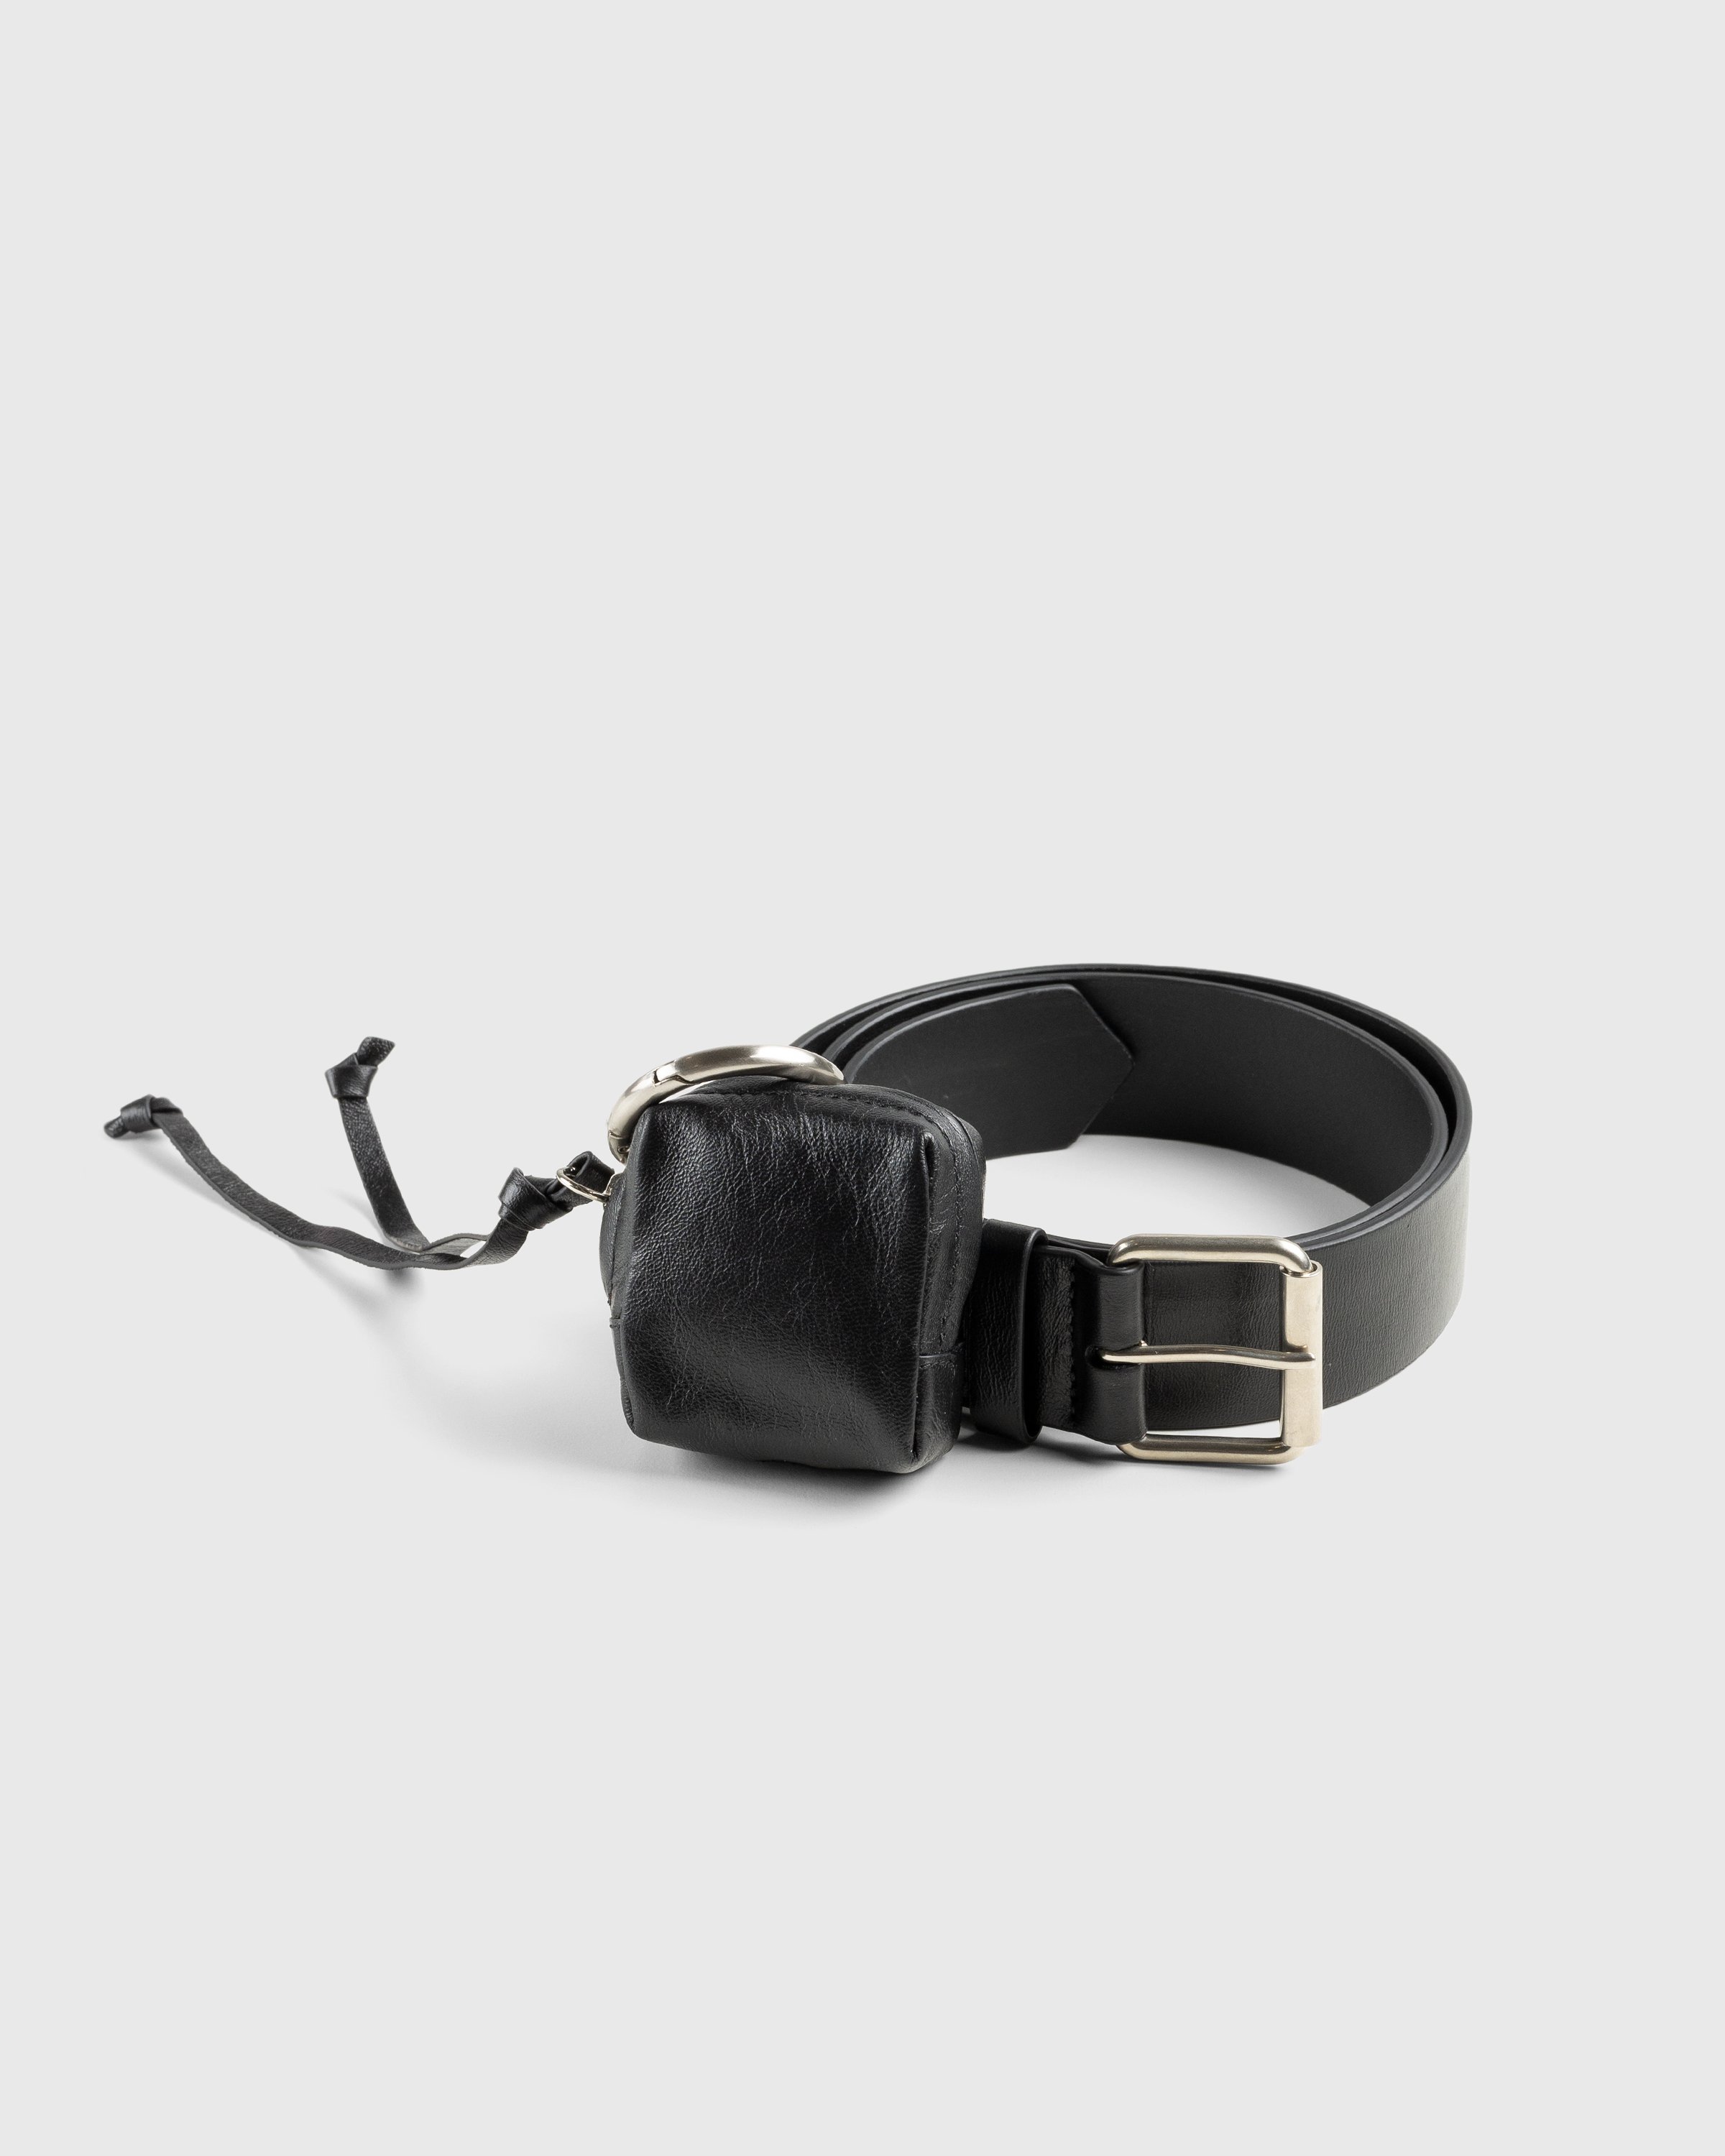 Dries van Noten - Leather Belt With Pouch Black - Accessories - Black - Image 2